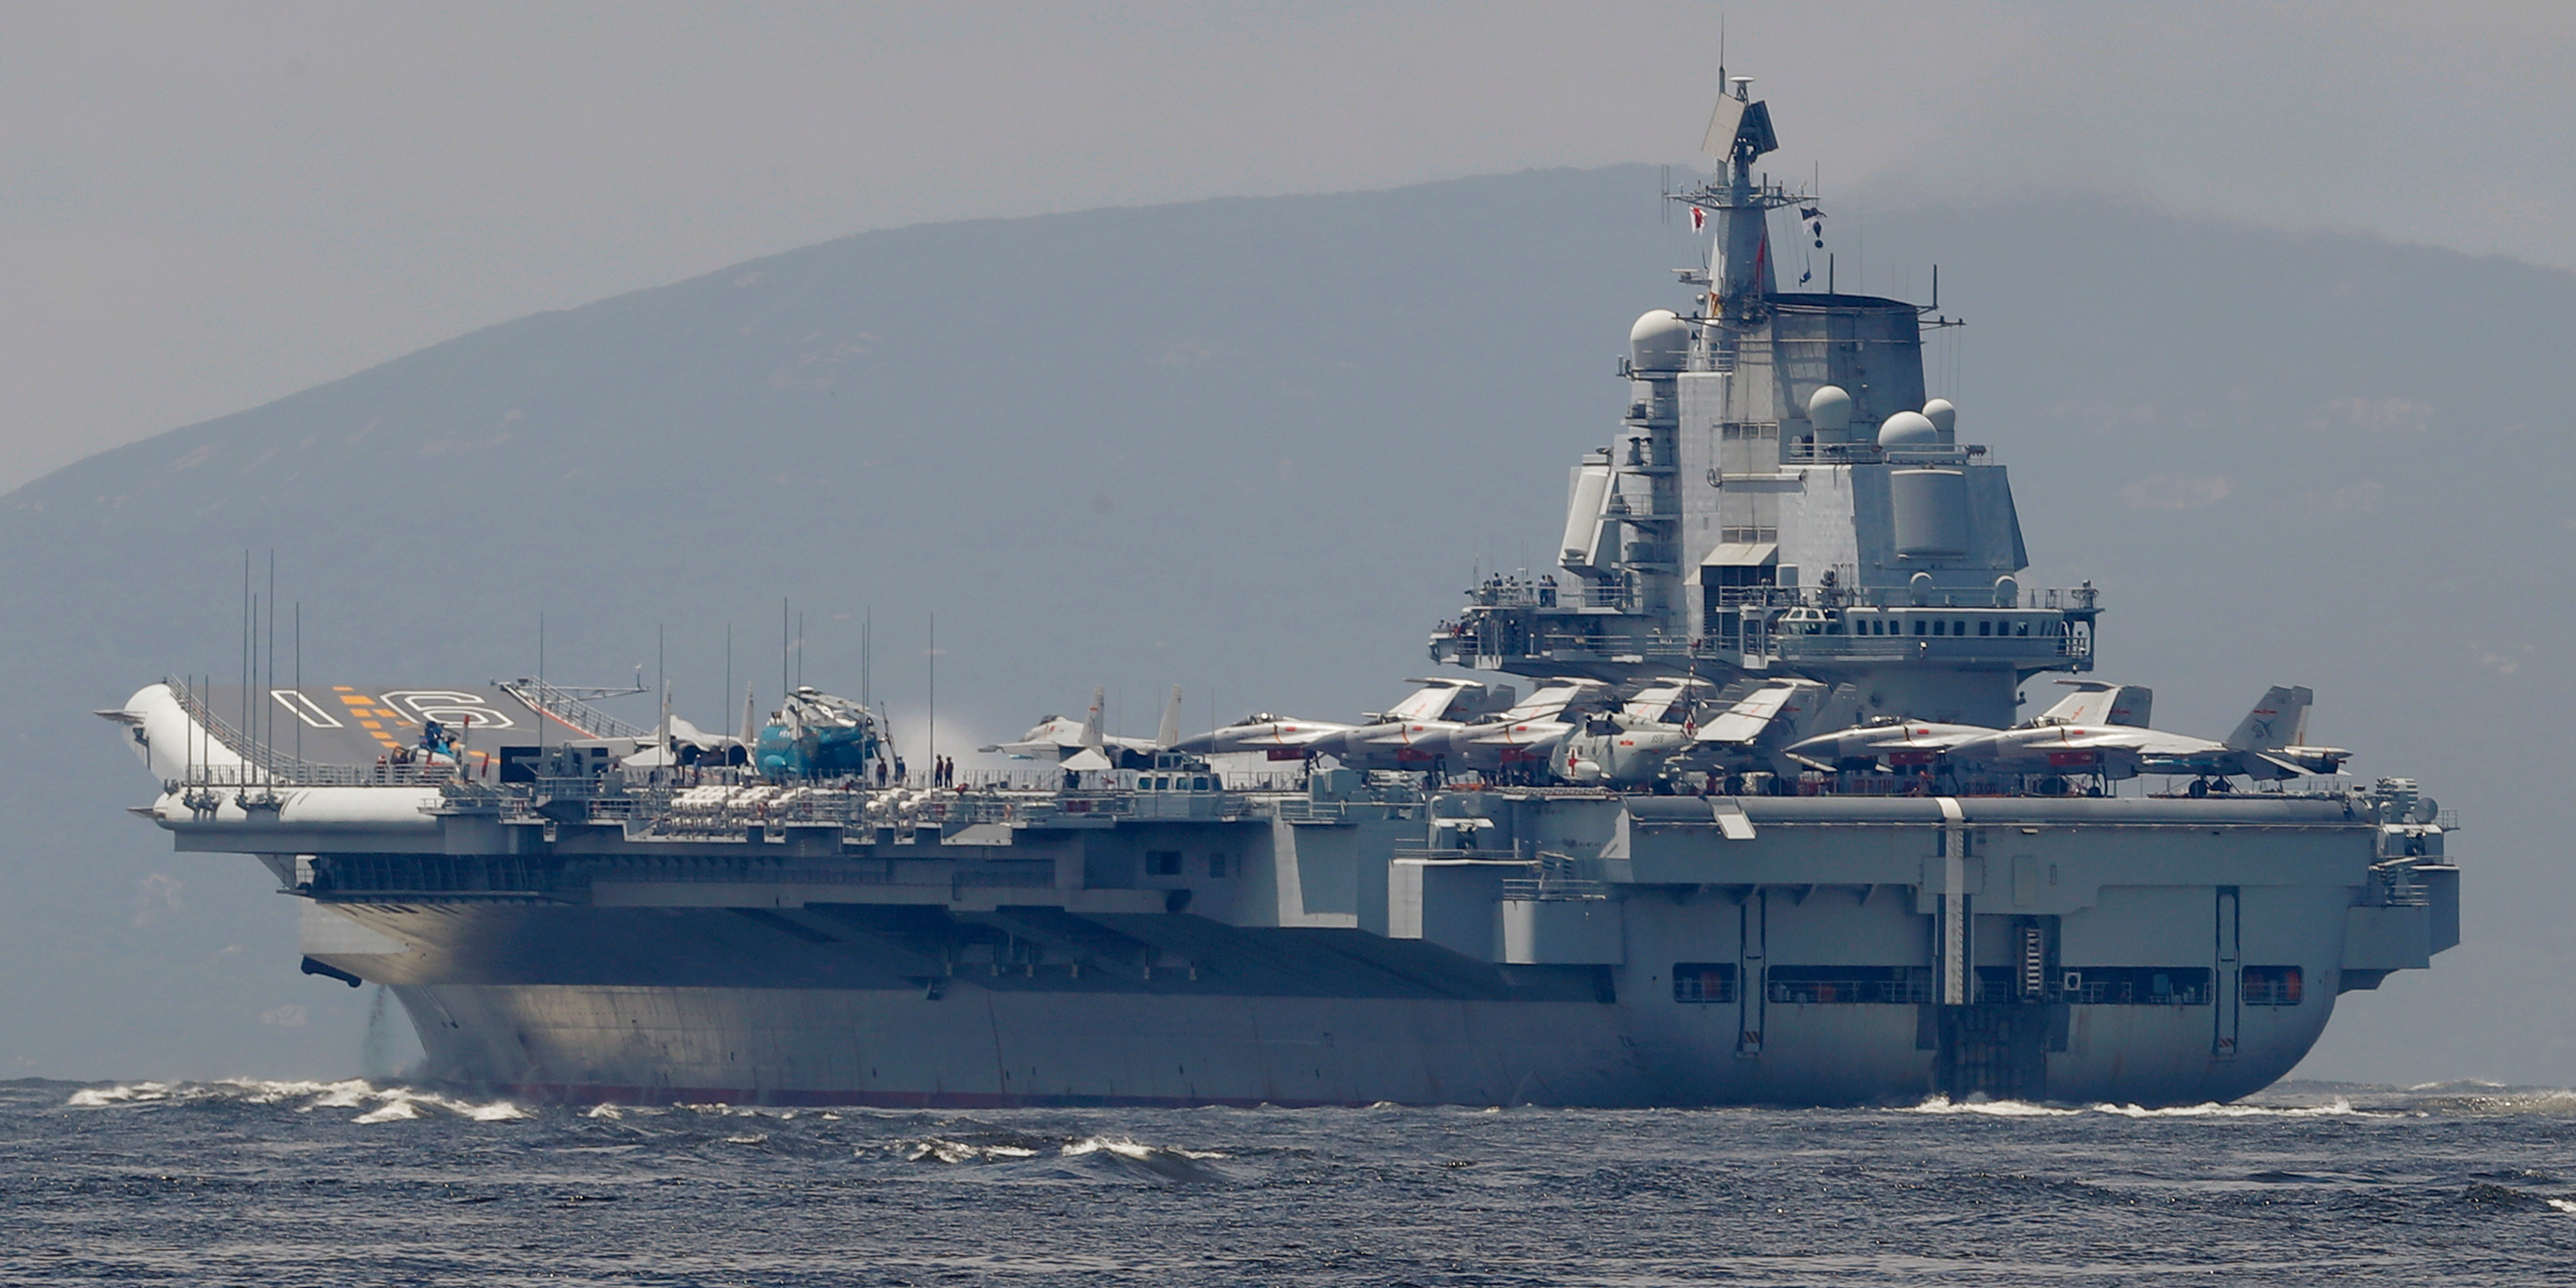 The Liaoning, China's first aircraft carrier, departs Hong Kong